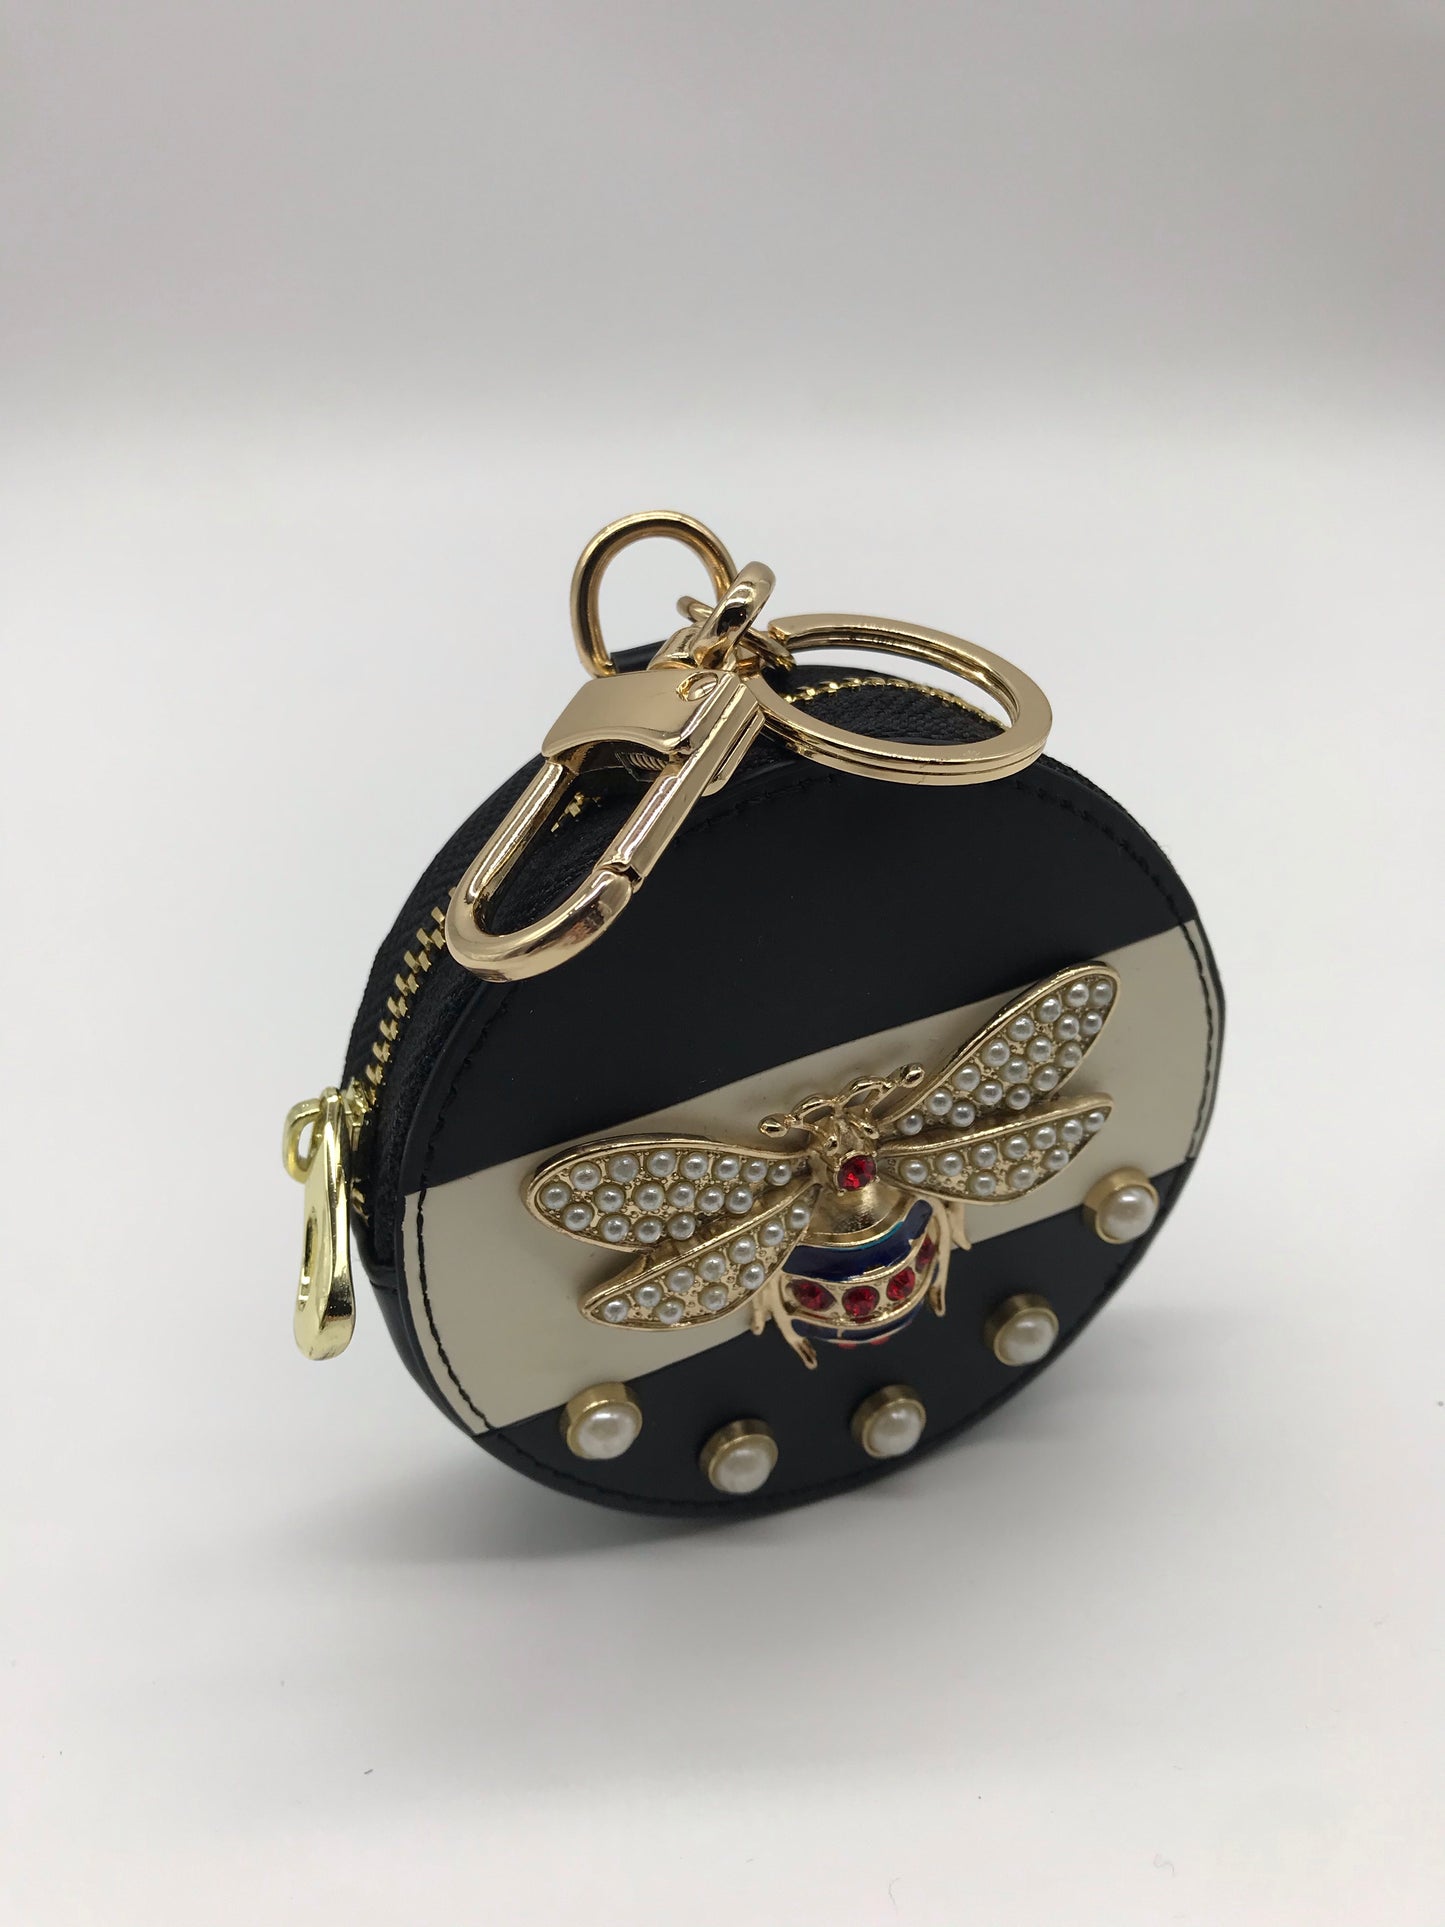 Queen Bee Coin/earbuds purse